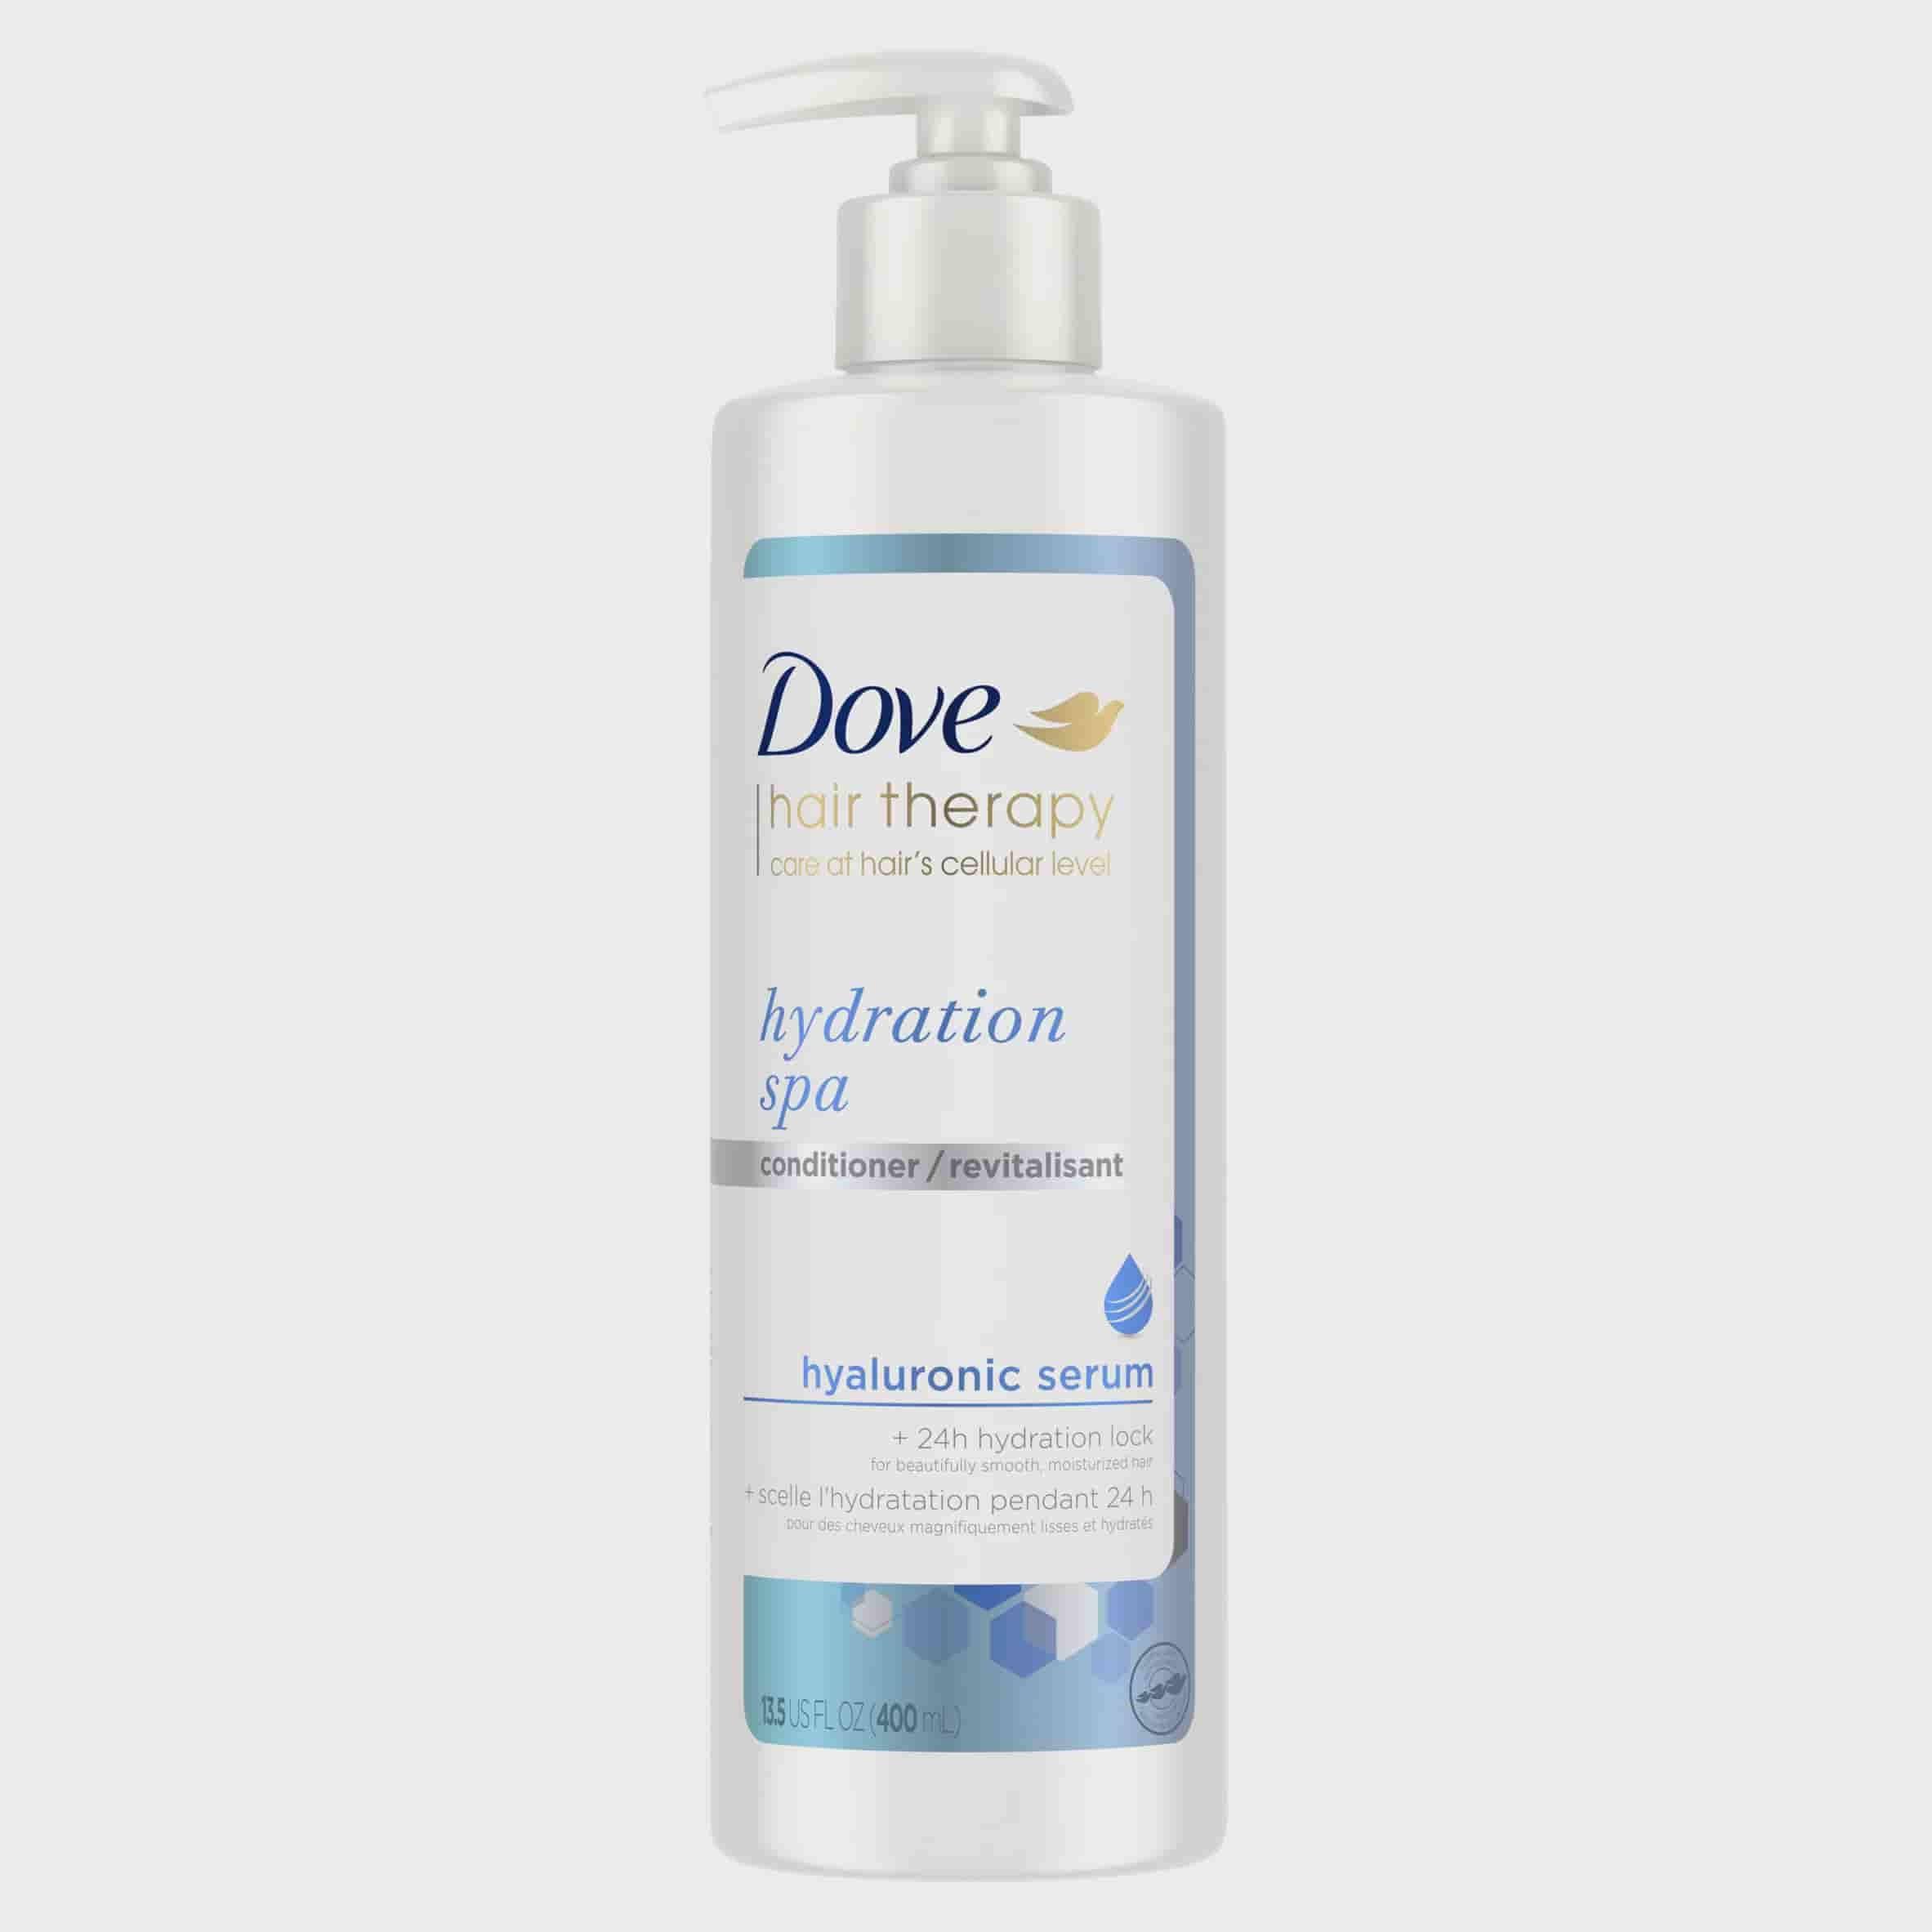 Dove Hair Therapy Hydration Spa Conditioner 13.5 FL oz (400 ml)